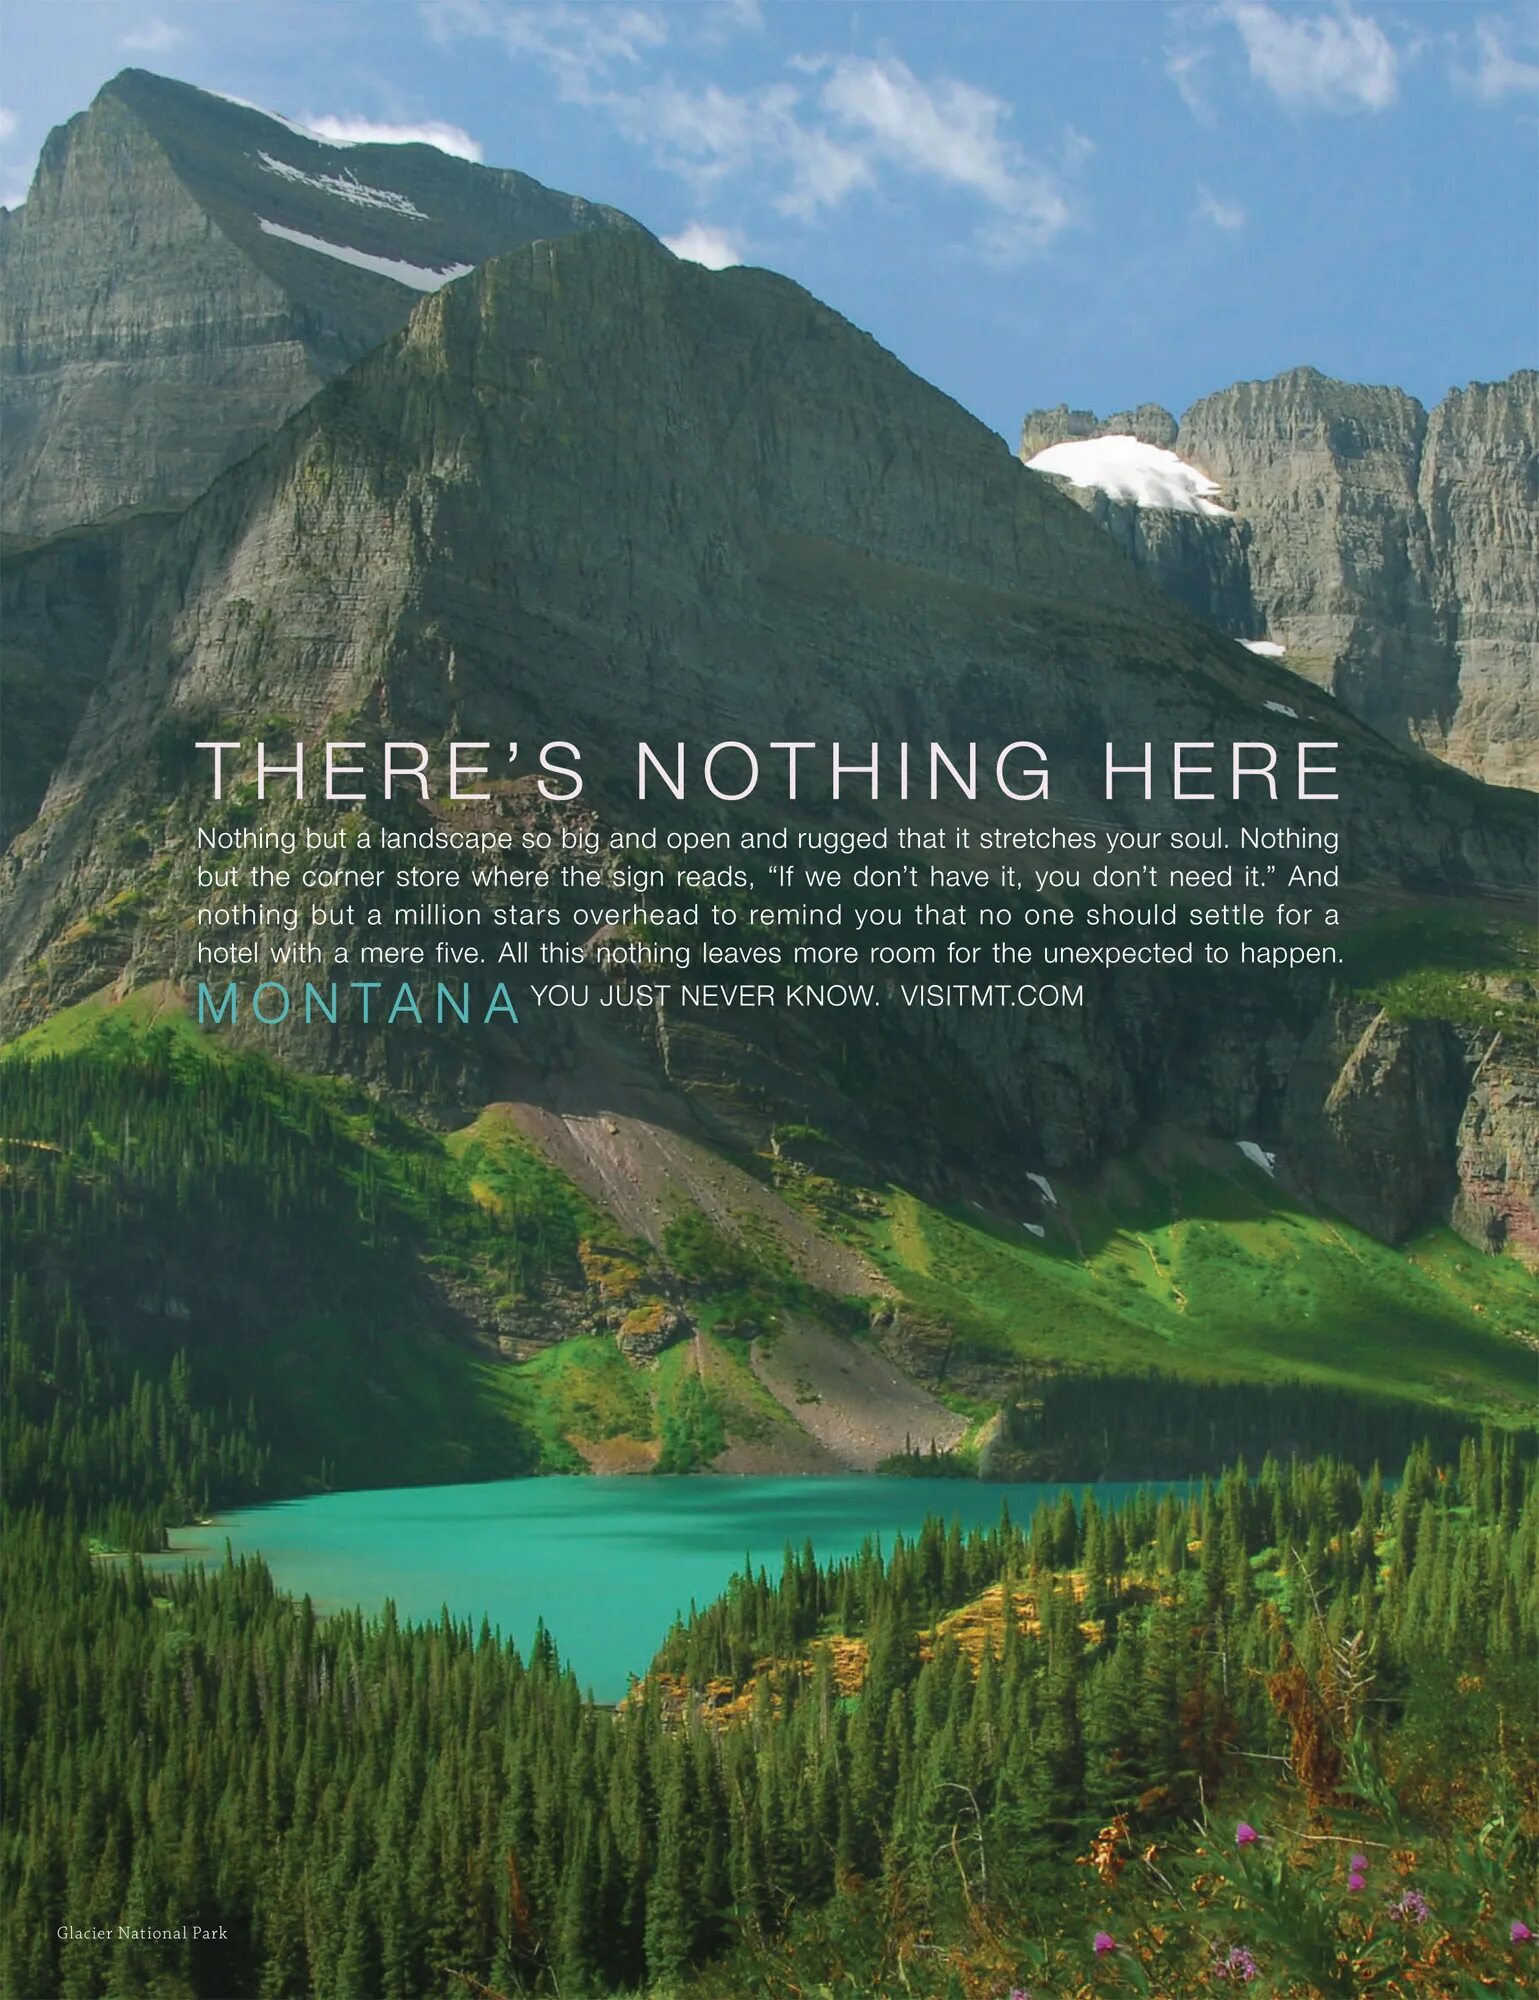 Реклама путешествий. Туризм реклама баннер. Travel advertisement. Montana Travel. Source travel